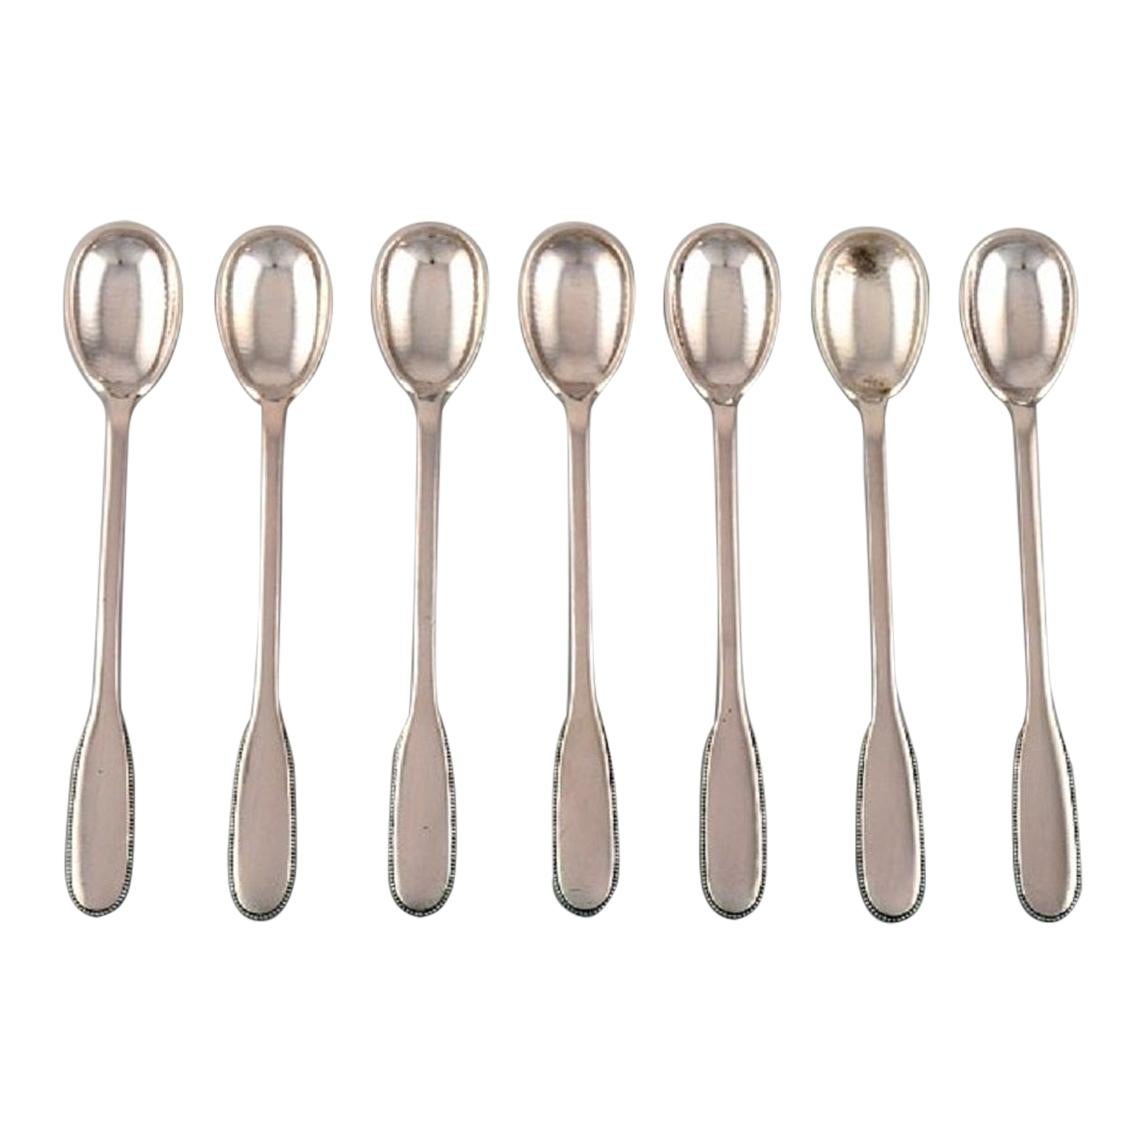 Seven Evald Nielsen Number 14 Iced Tea Spoons in Hammered Silver, 1920s. 